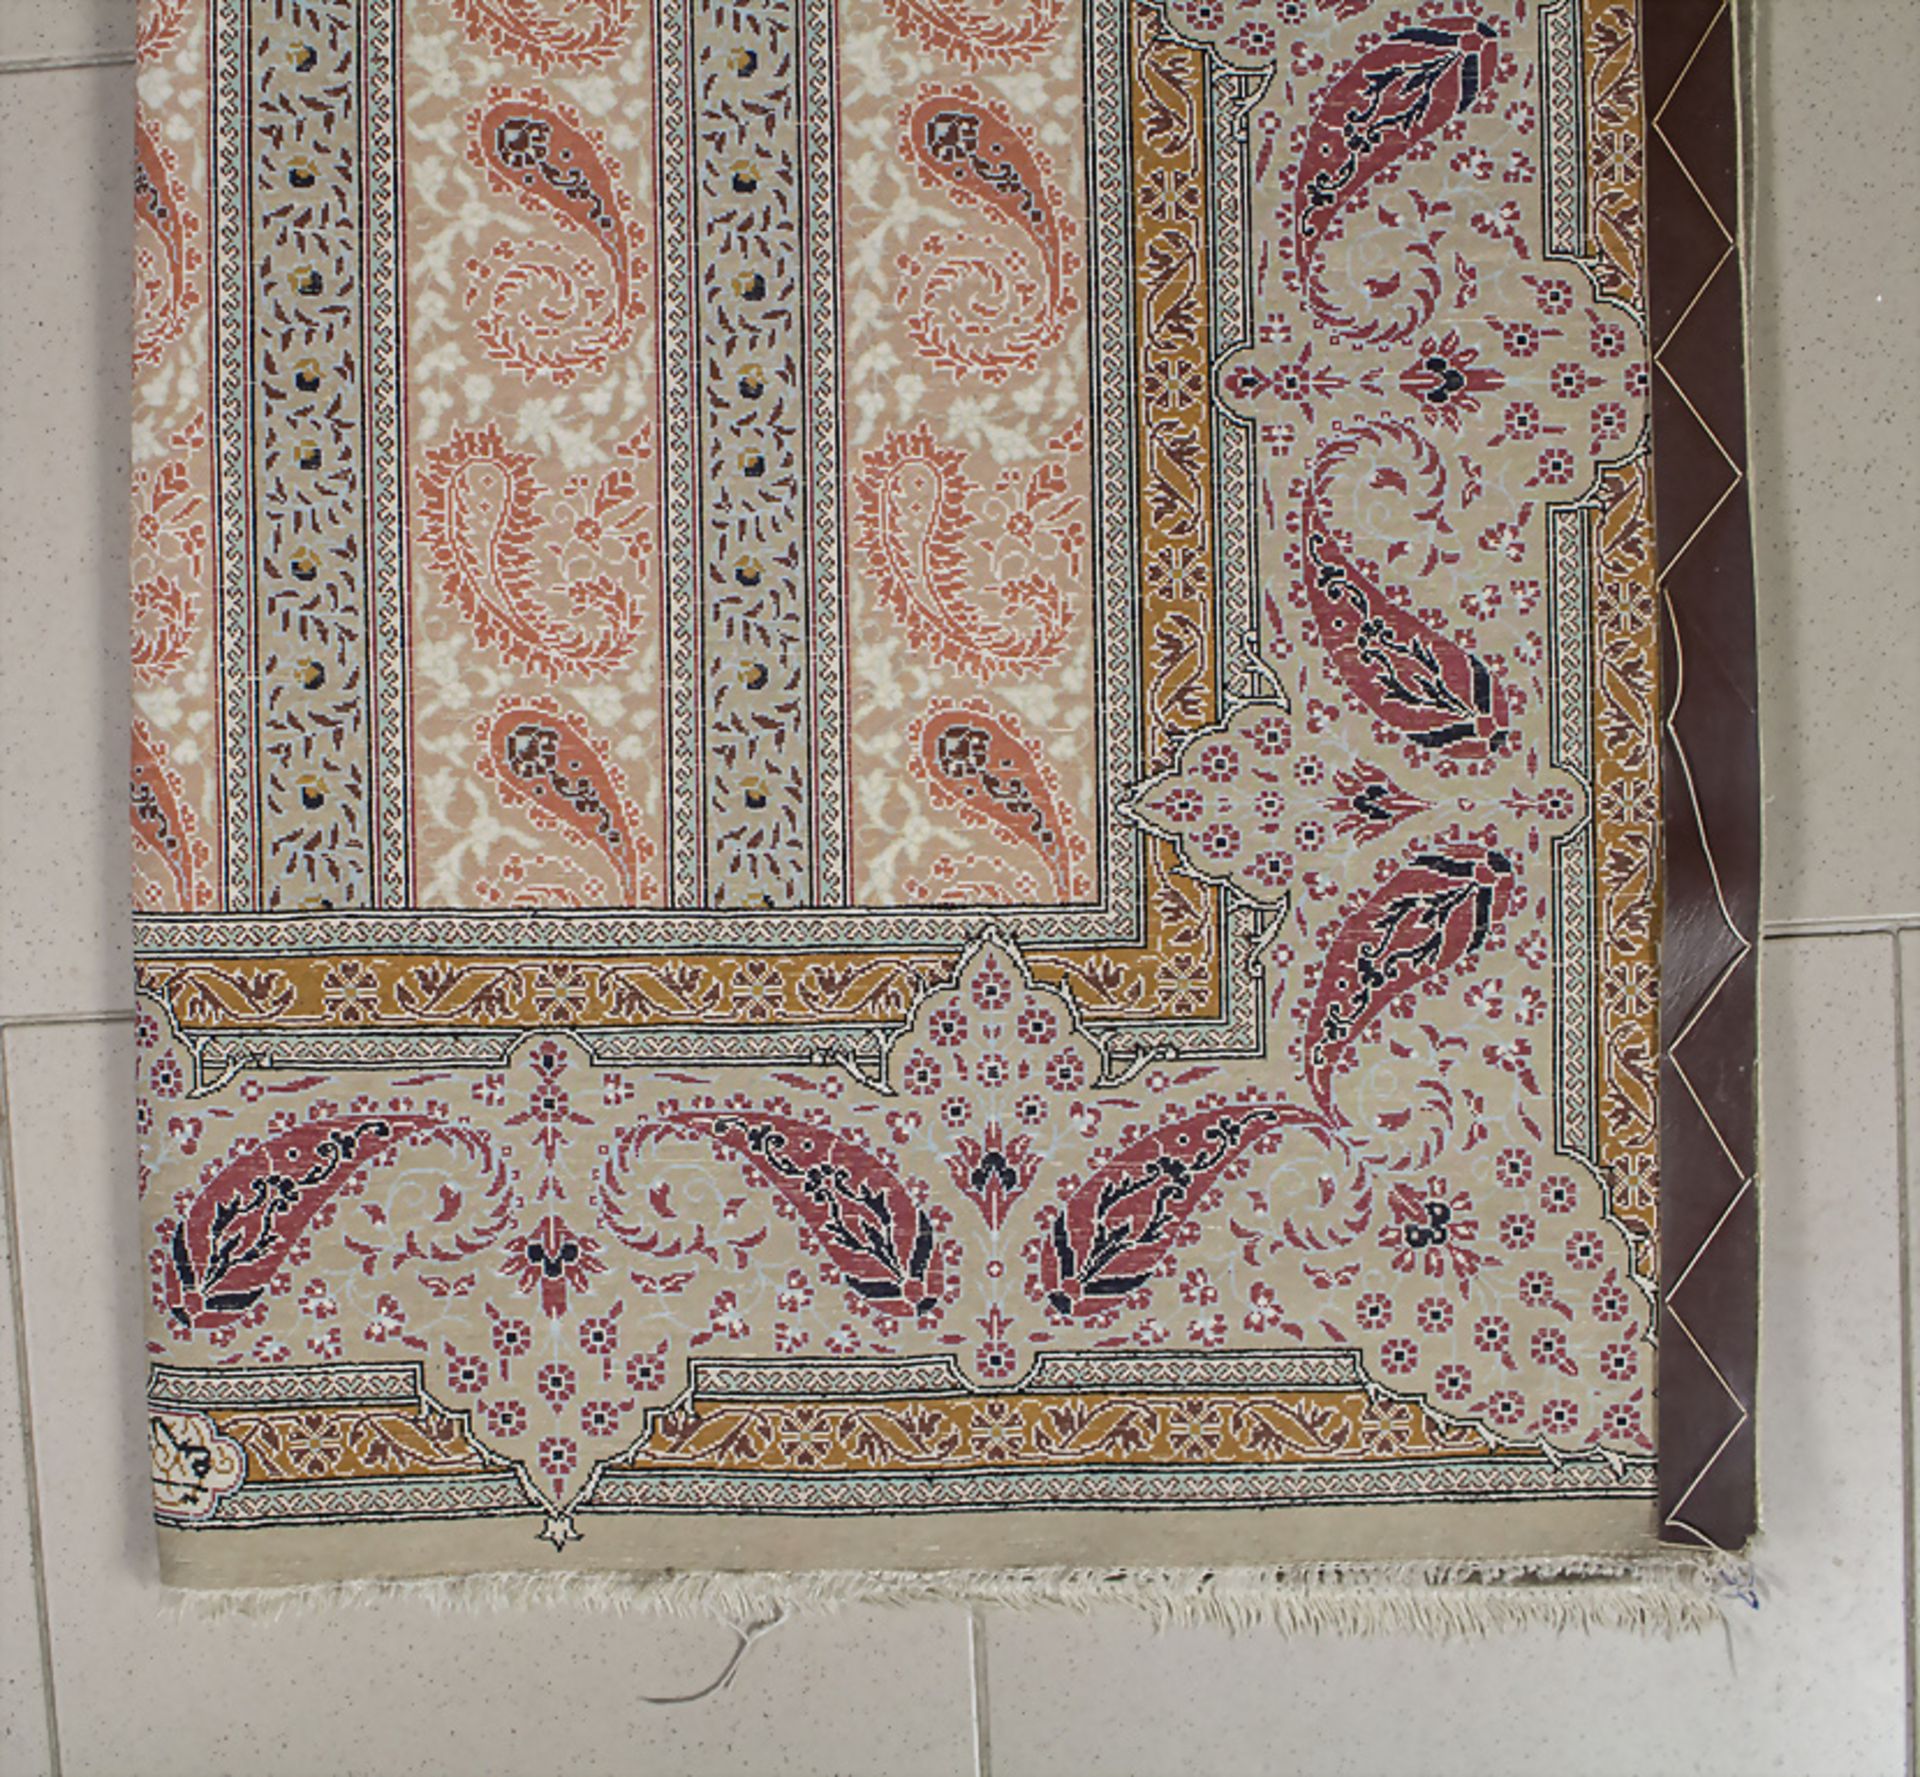 Teppich / A carpet - Bild 3 aus 3